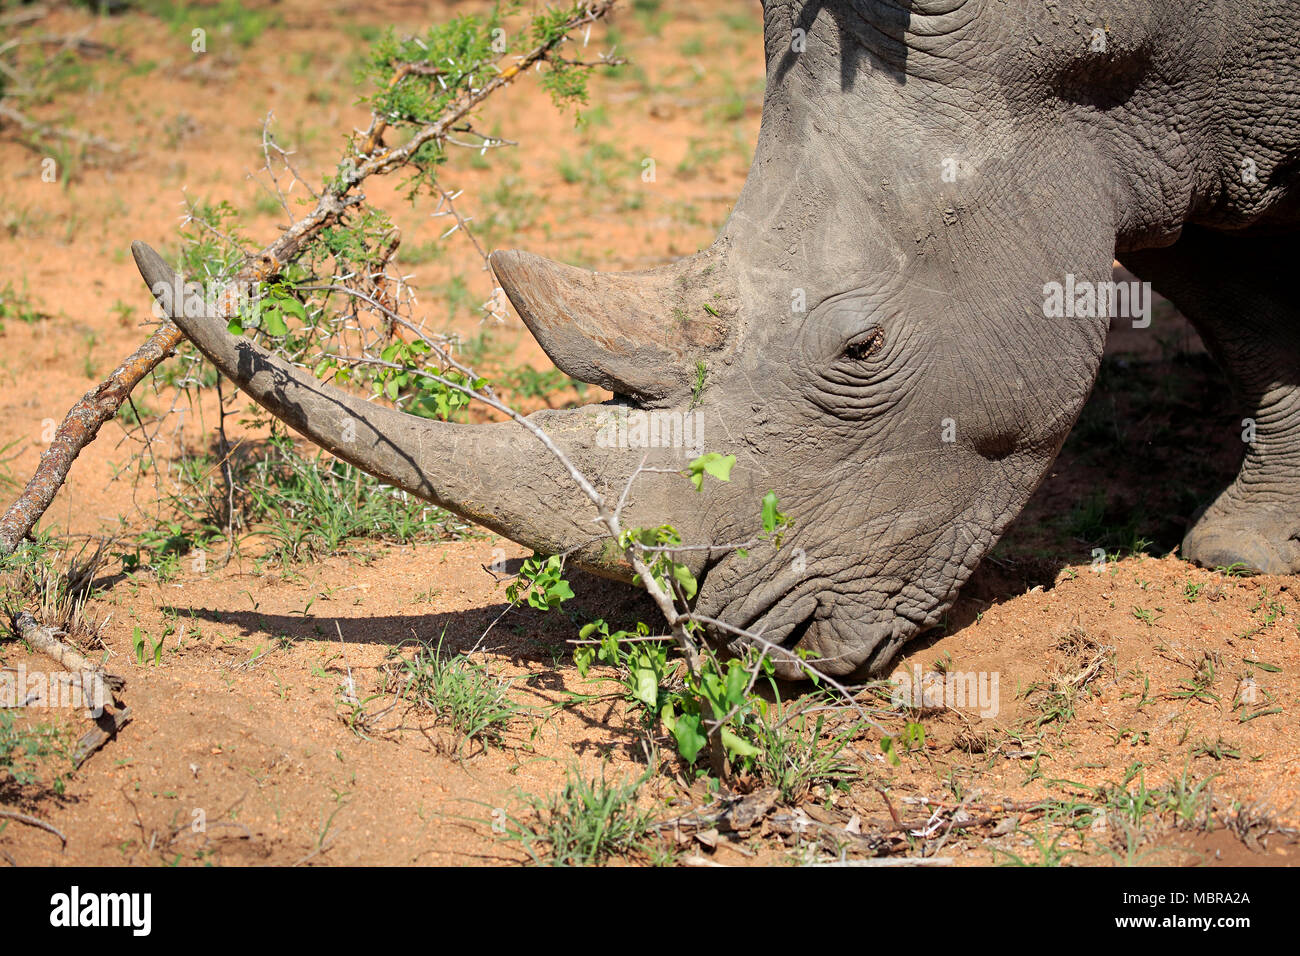 White rhinoceros (Ceratotherium simum), adult, animal portrait, eating, foraging, pachyderm, Sabi Sand Game Reserve Stock Photo